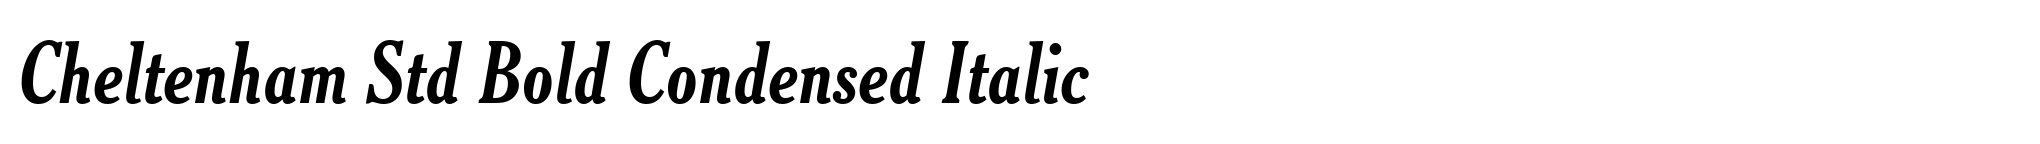 Cheltenham Std Bold Condensed Italic image